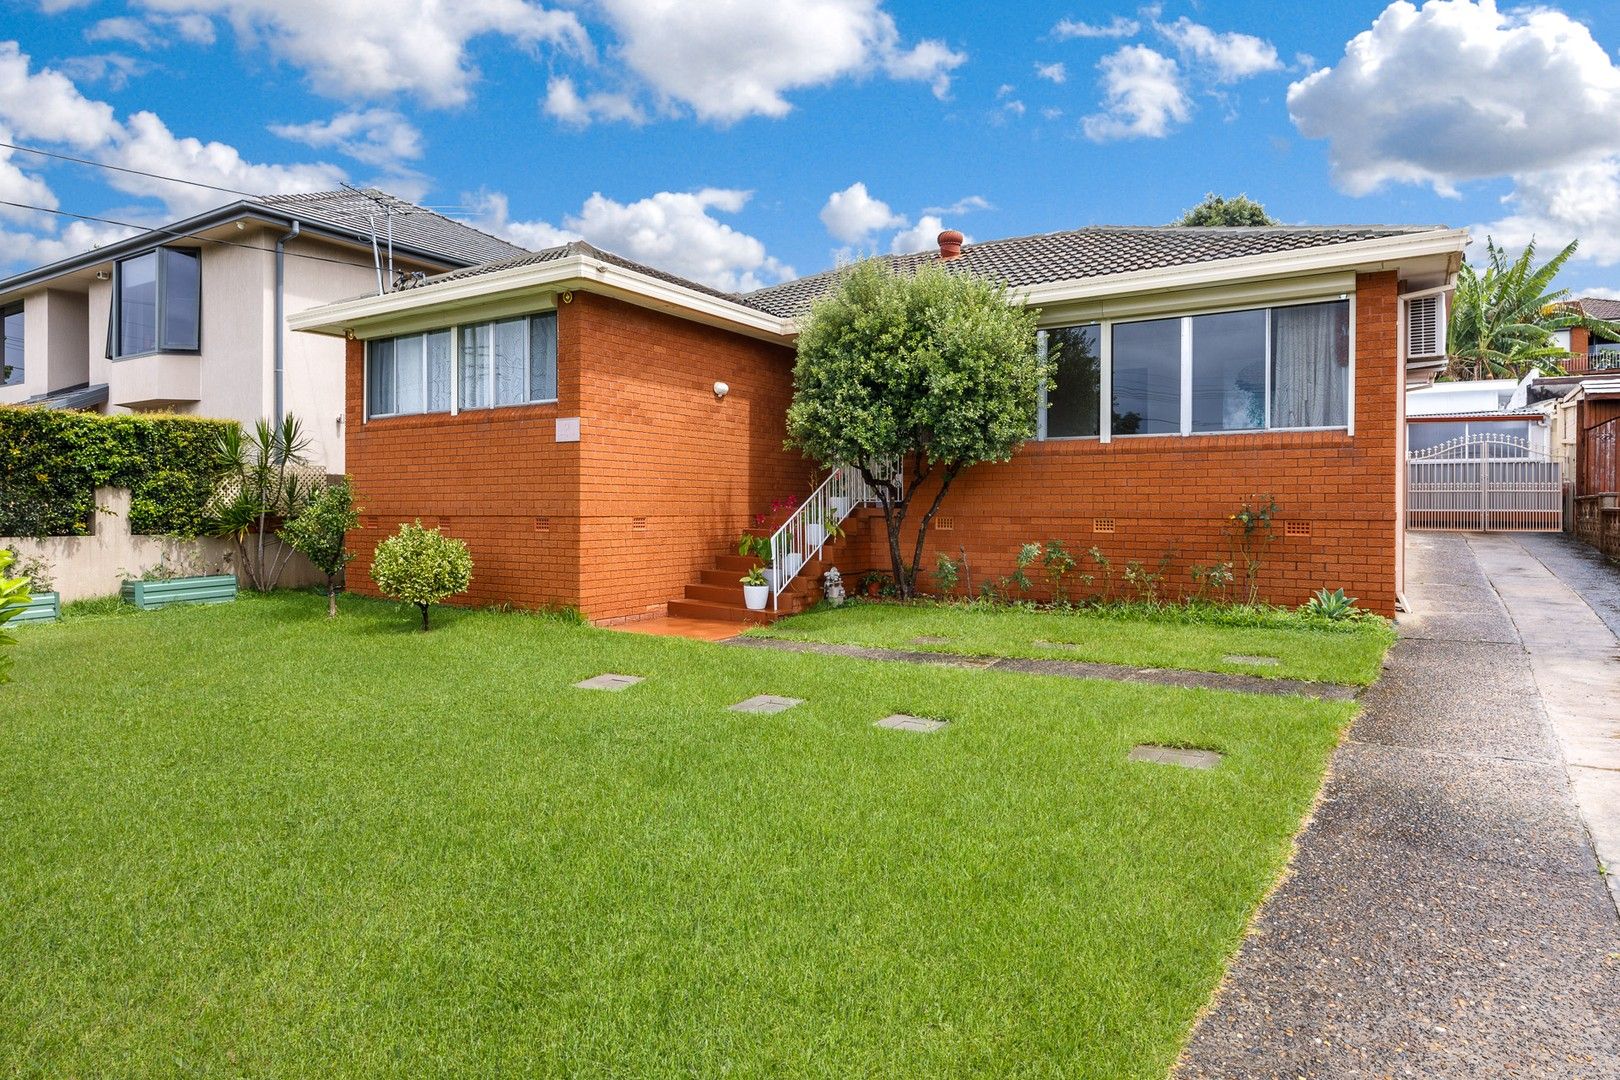 5 bedrooms House in 64 Herring Road MARSFIELD NSW, 2122